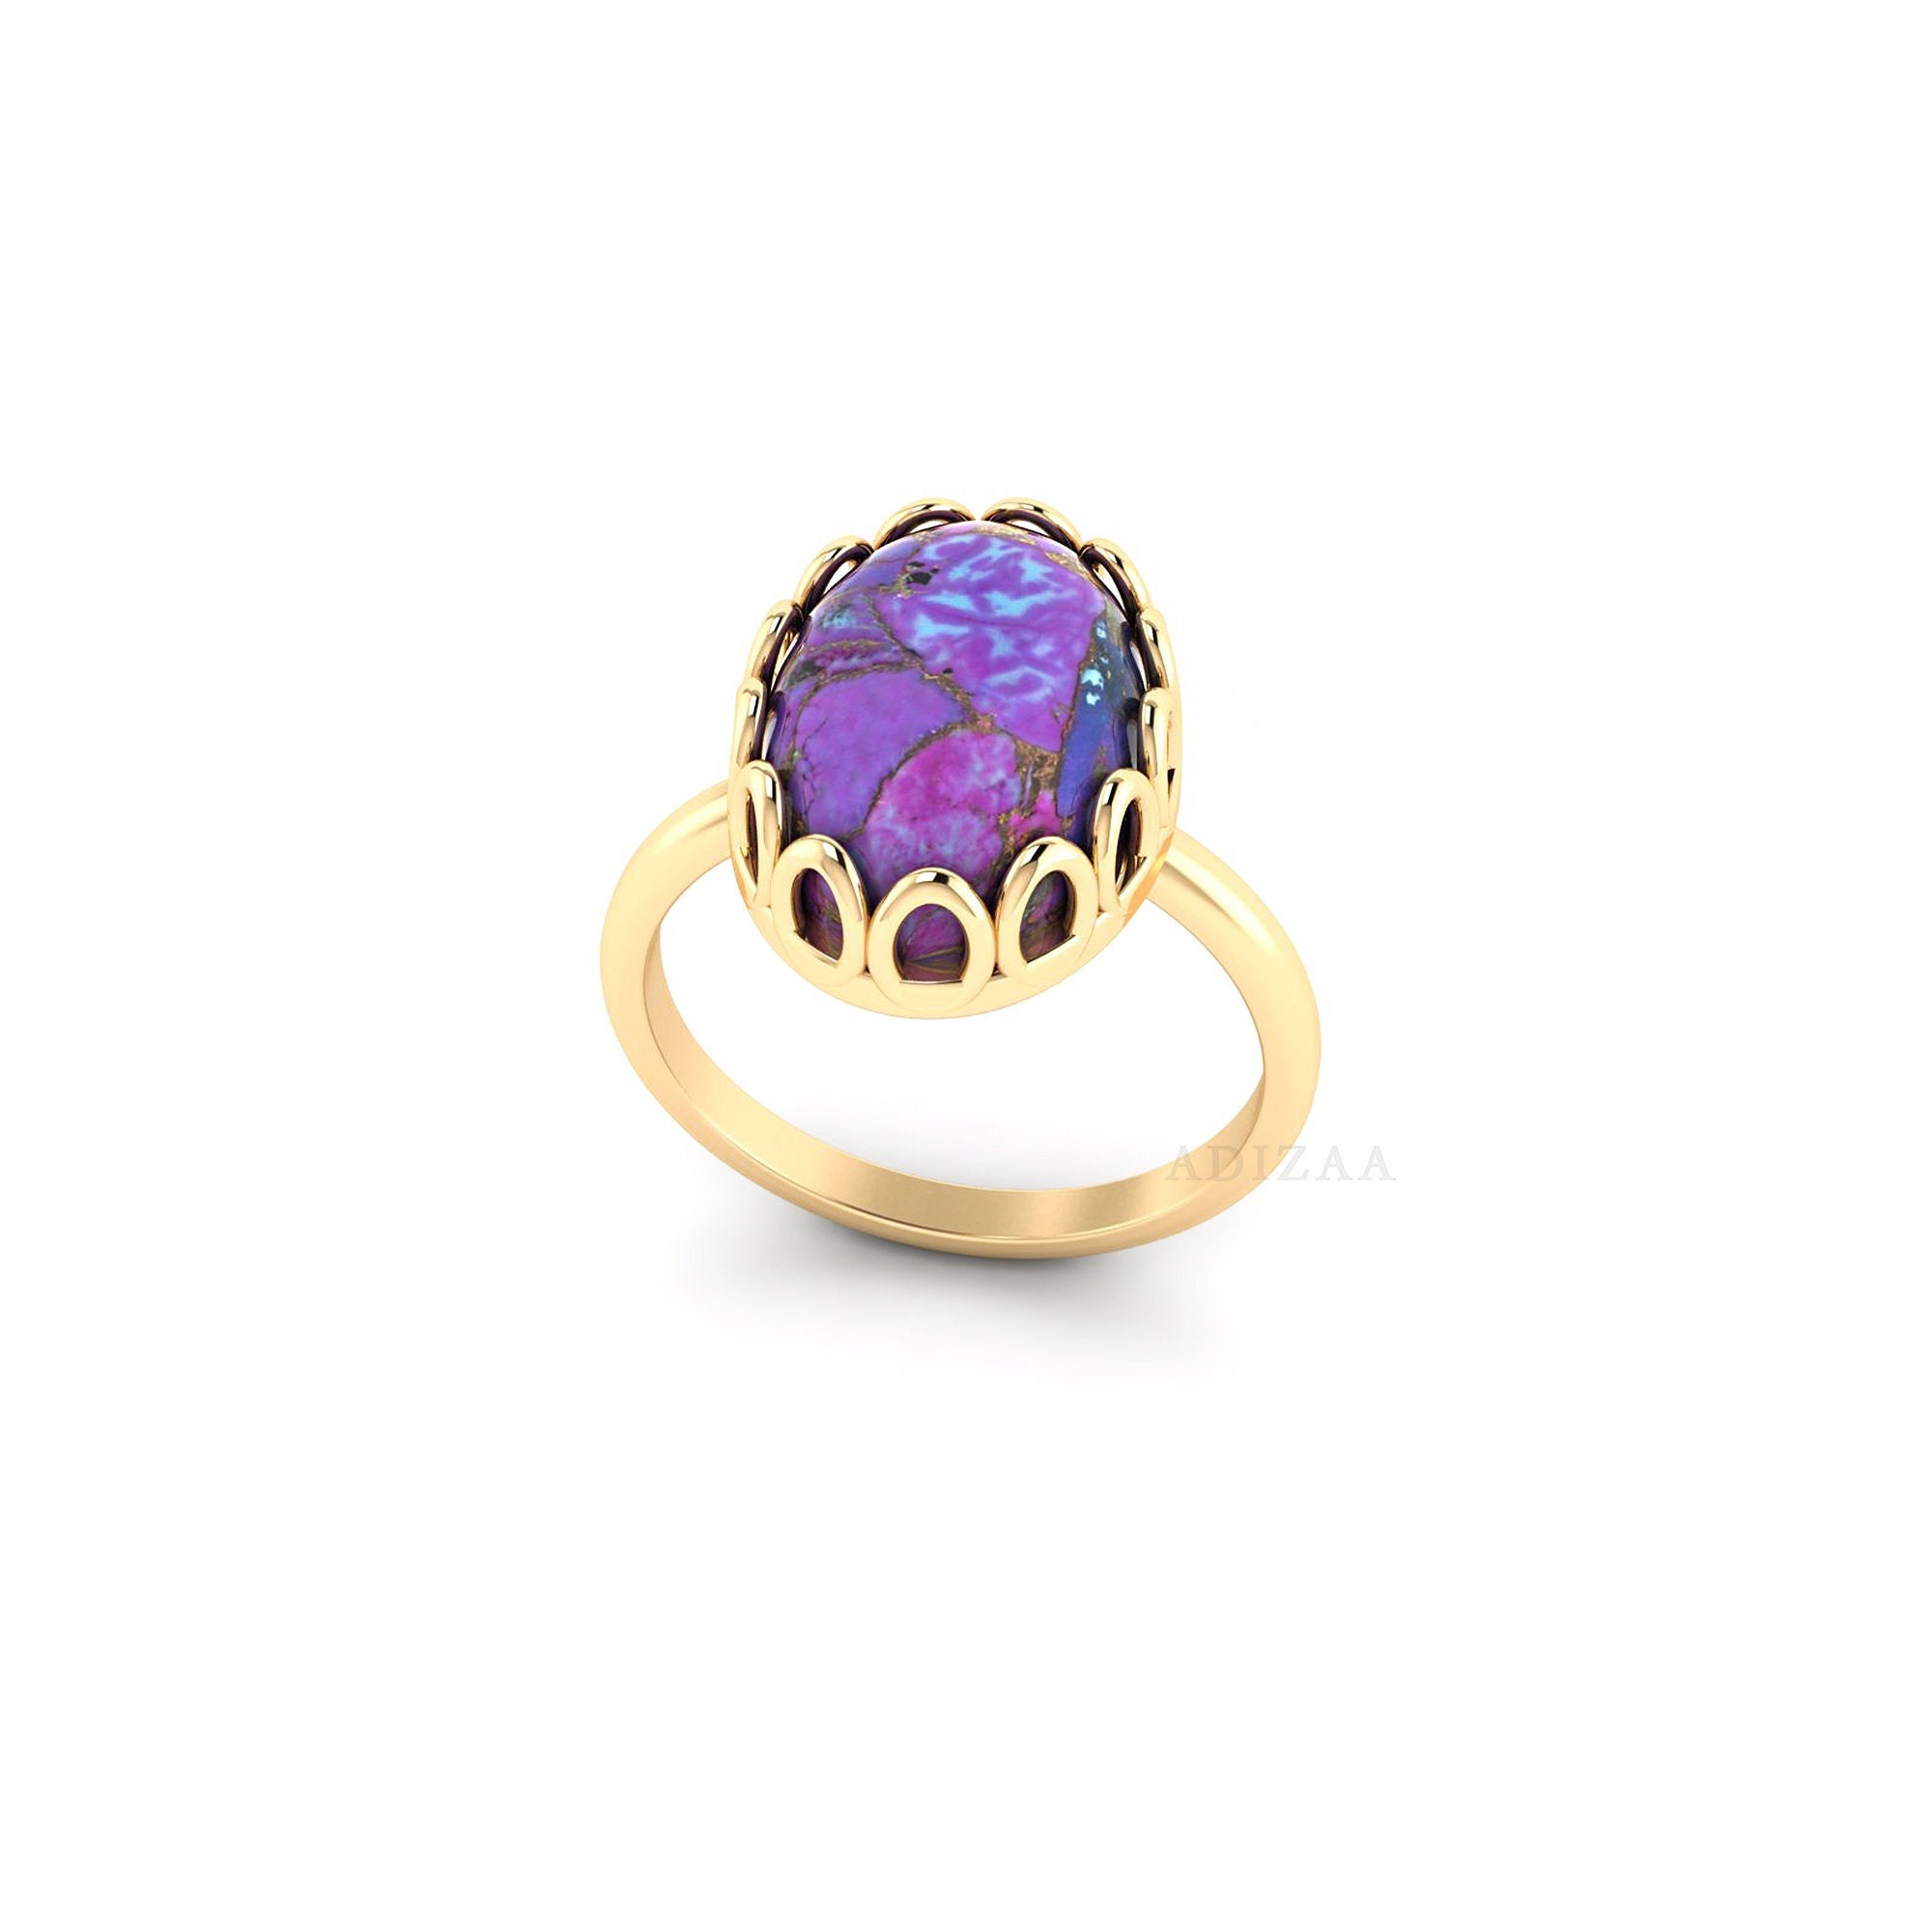 Bejeweled Tear Shaped Ring Purple Rhinestones Size 8.5 Adjustable